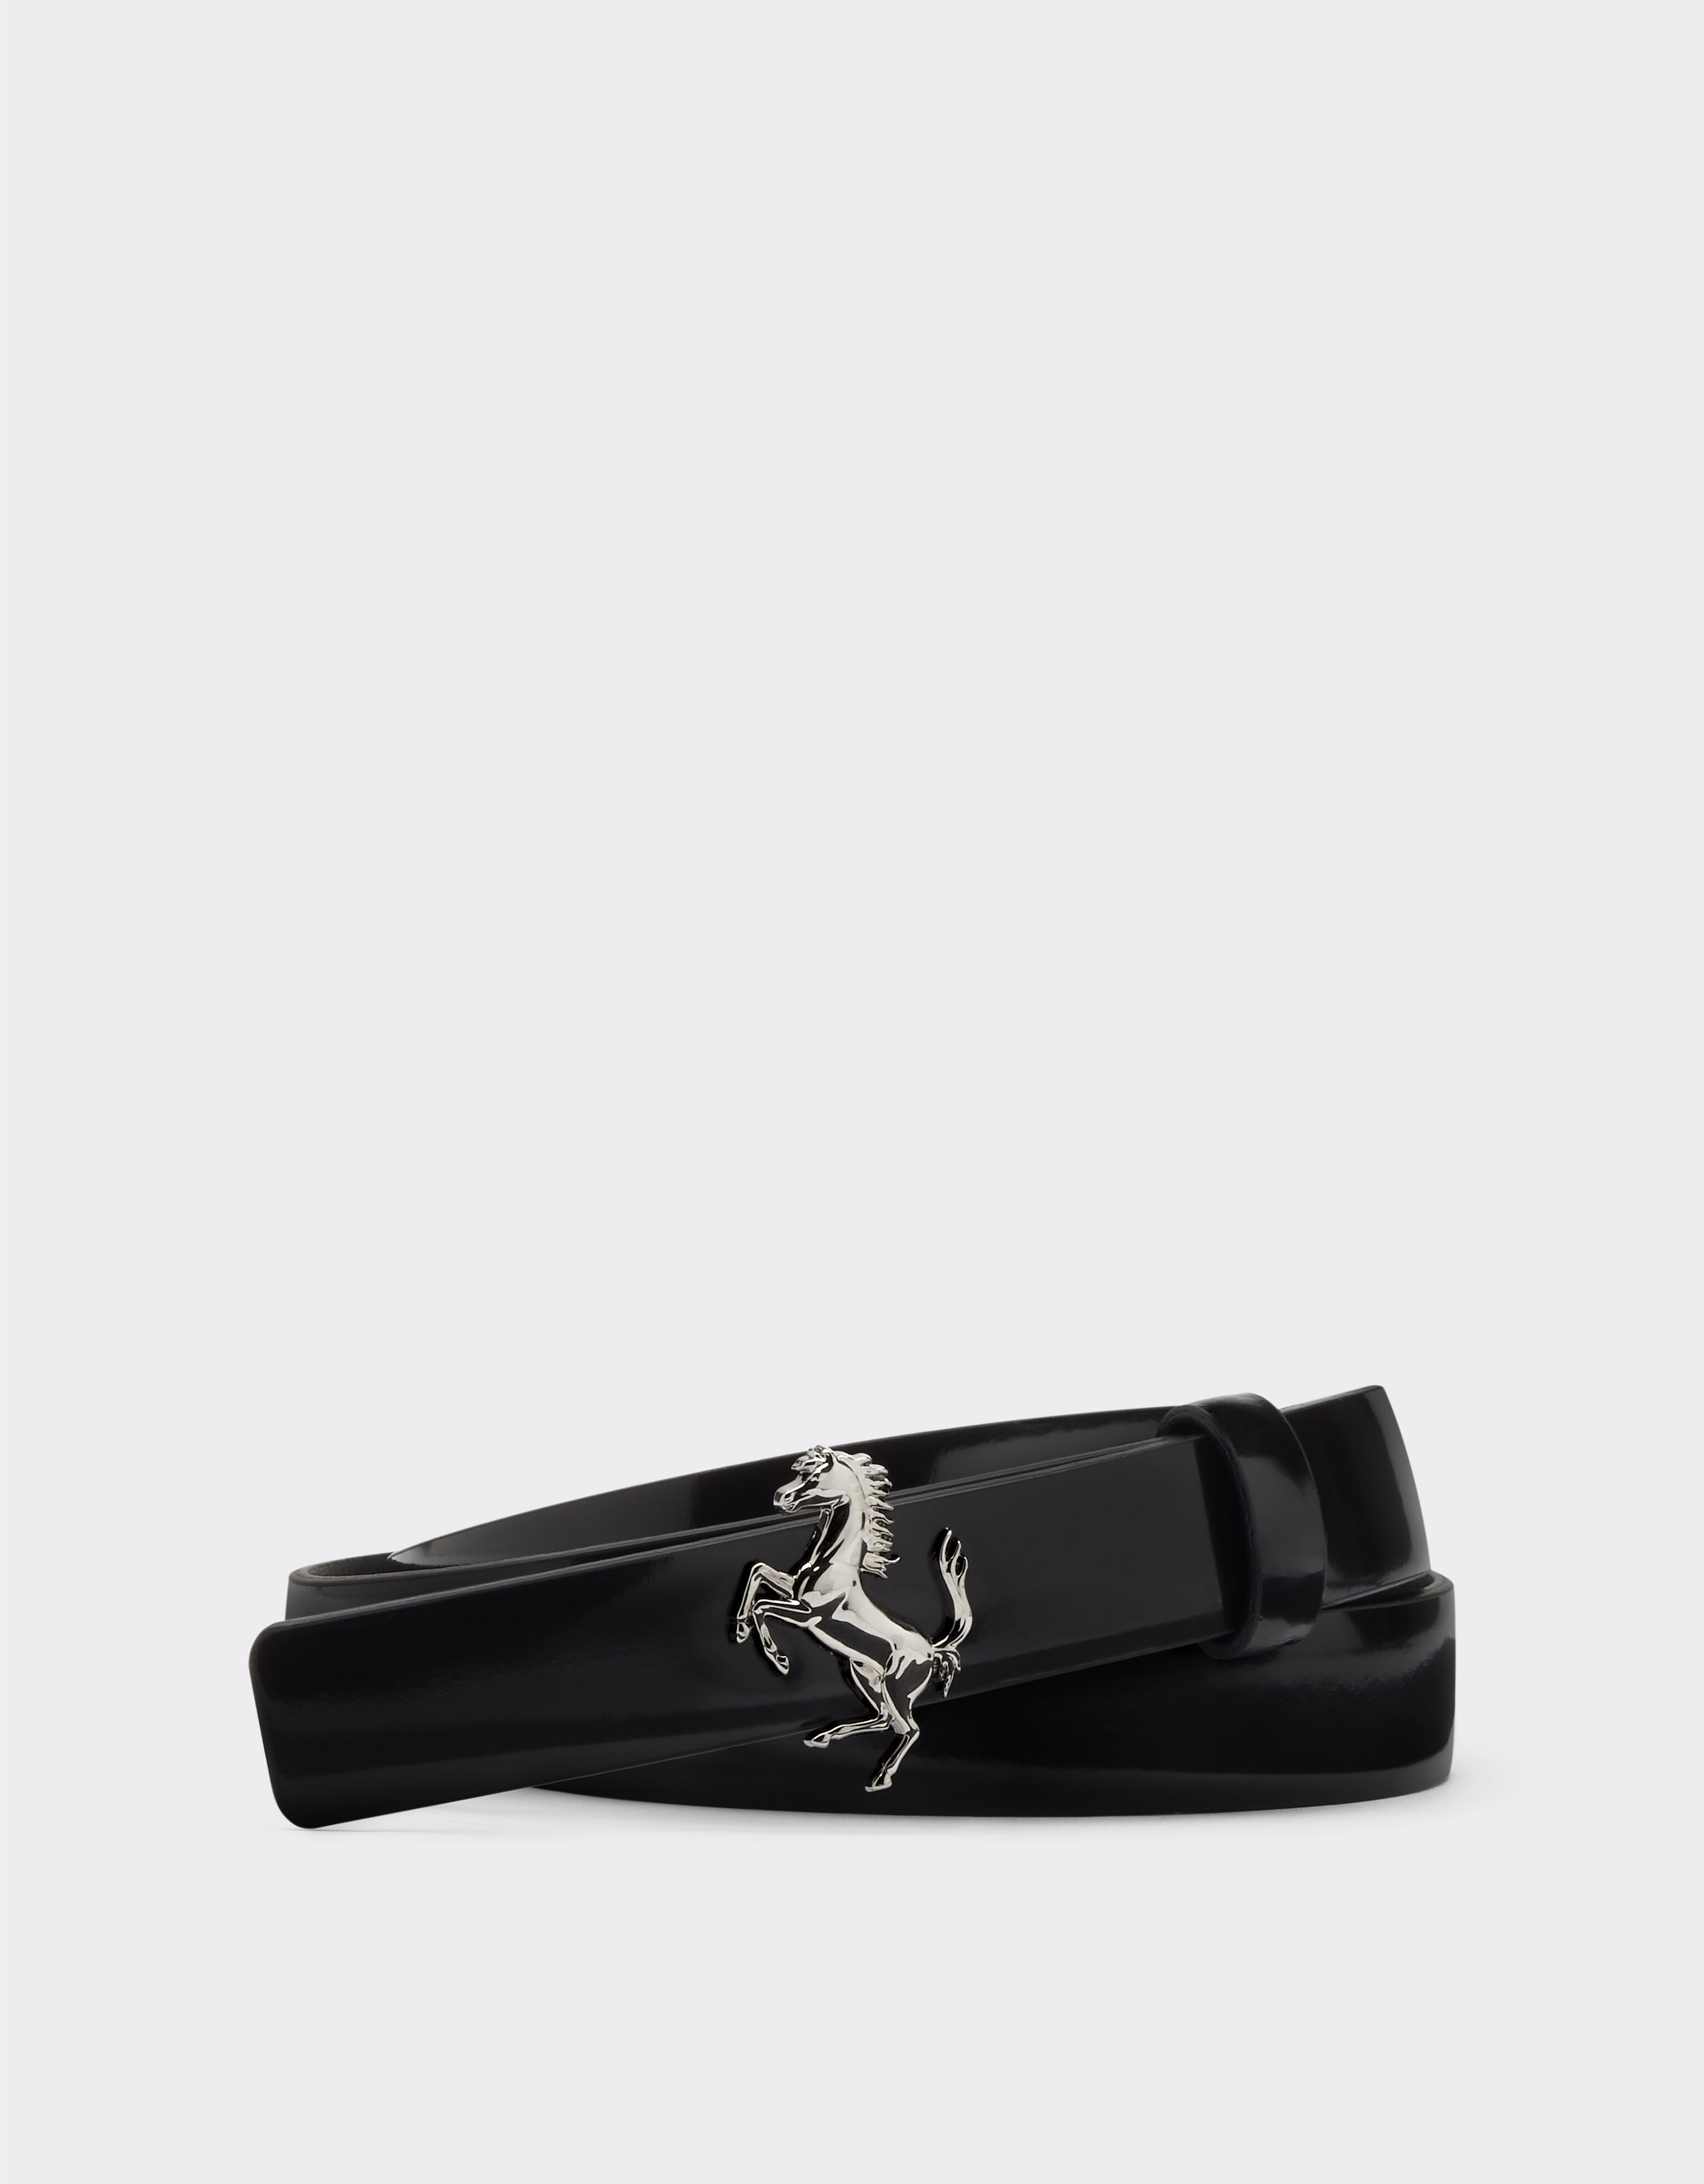 Ferrari Brushed leather belt with Prancing Horse Ingrid 20684f